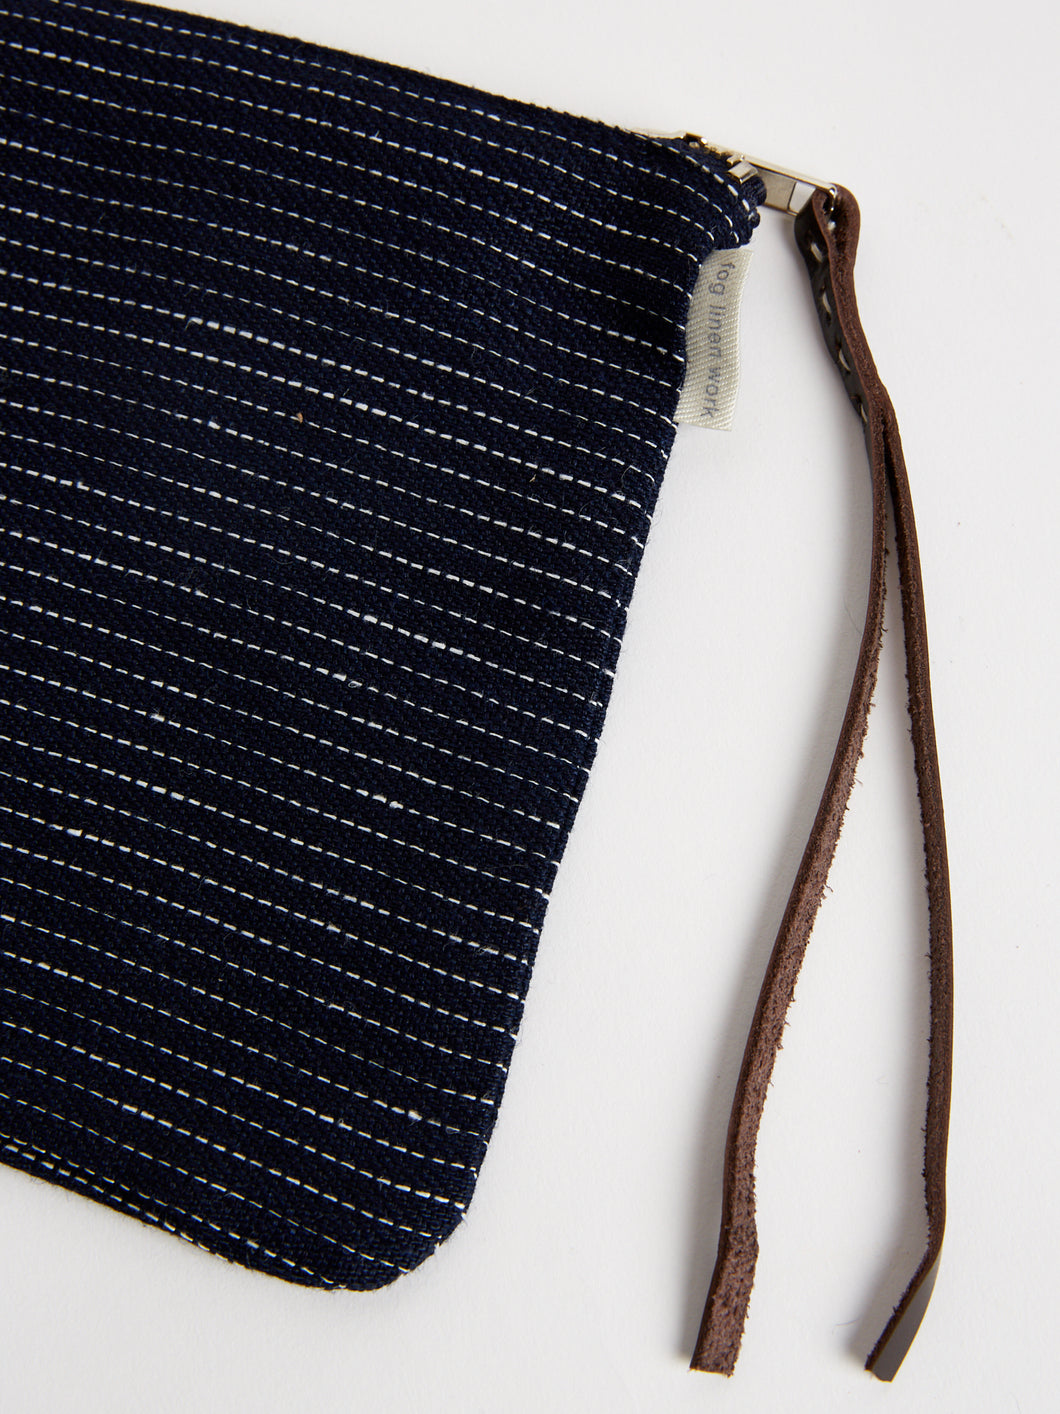 Linen Bag in Navy Pin Stripe